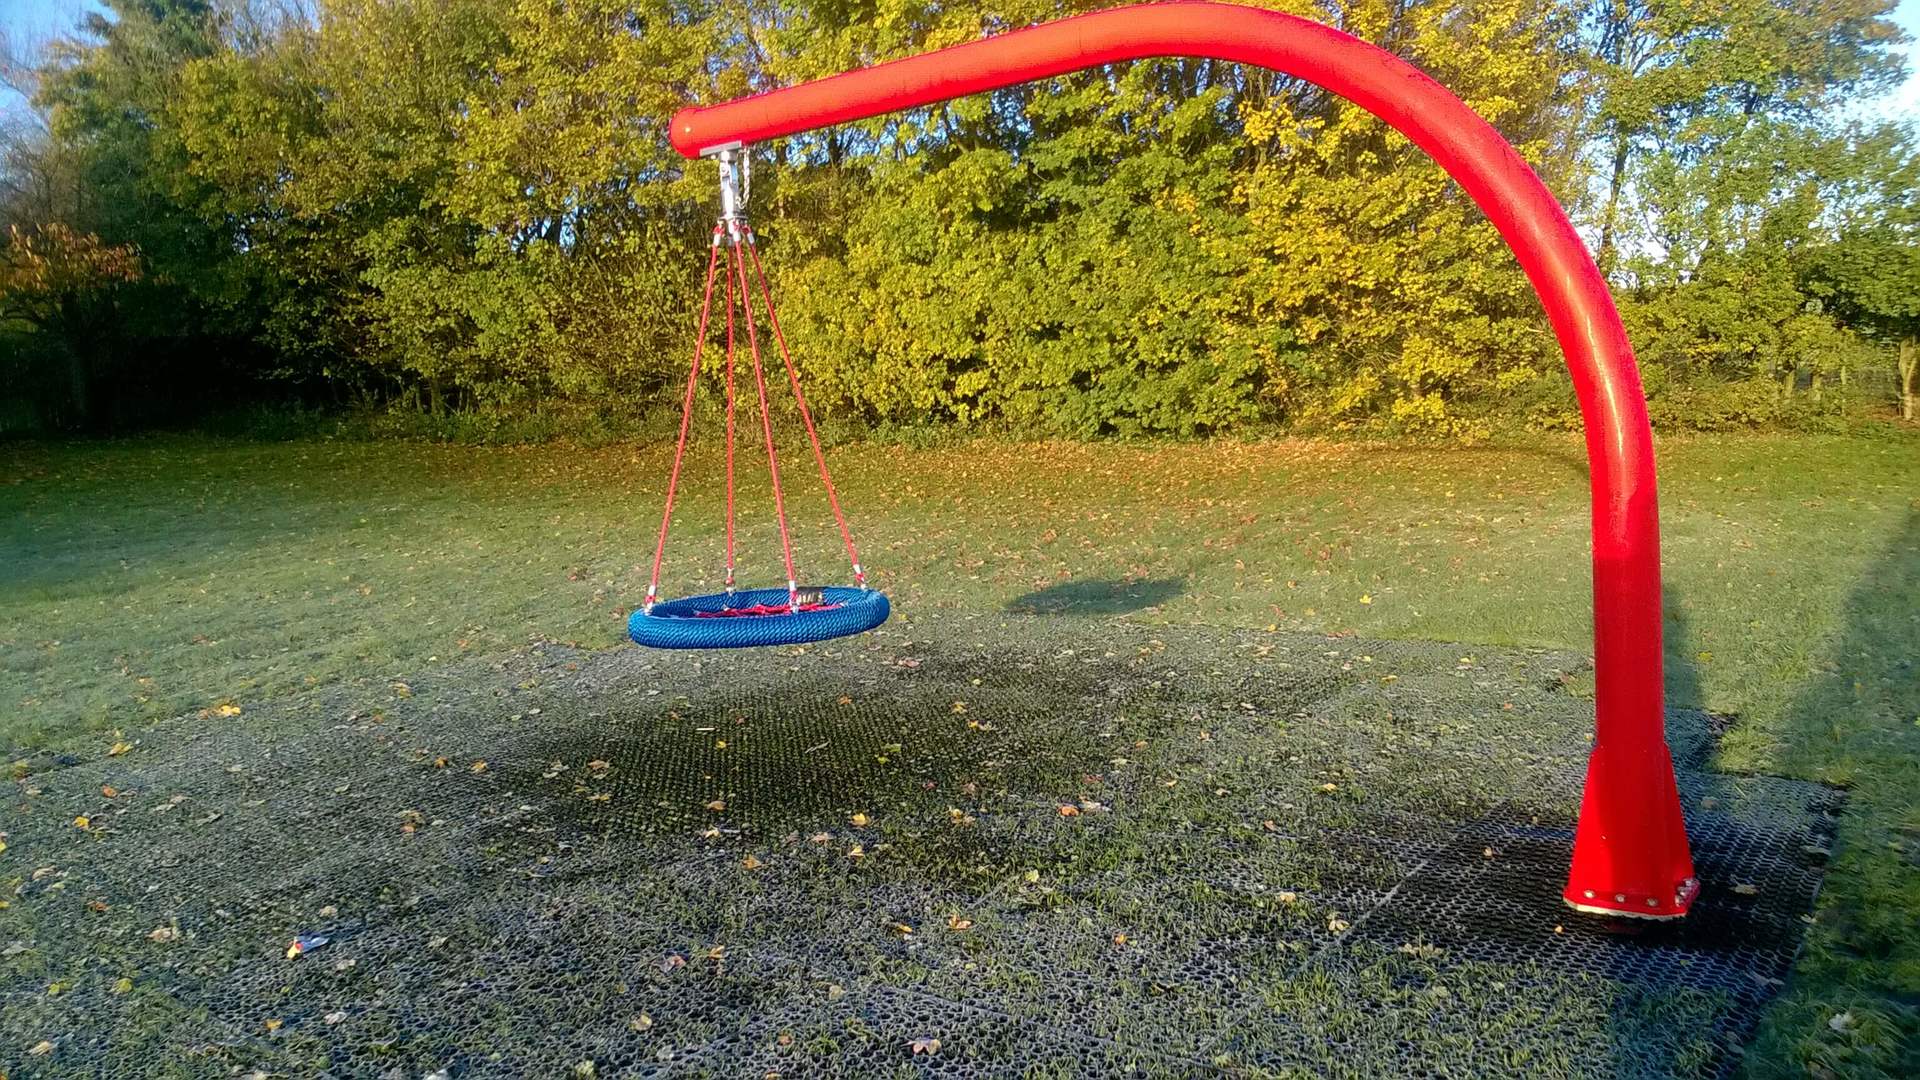 Playground Swing in Grass Park